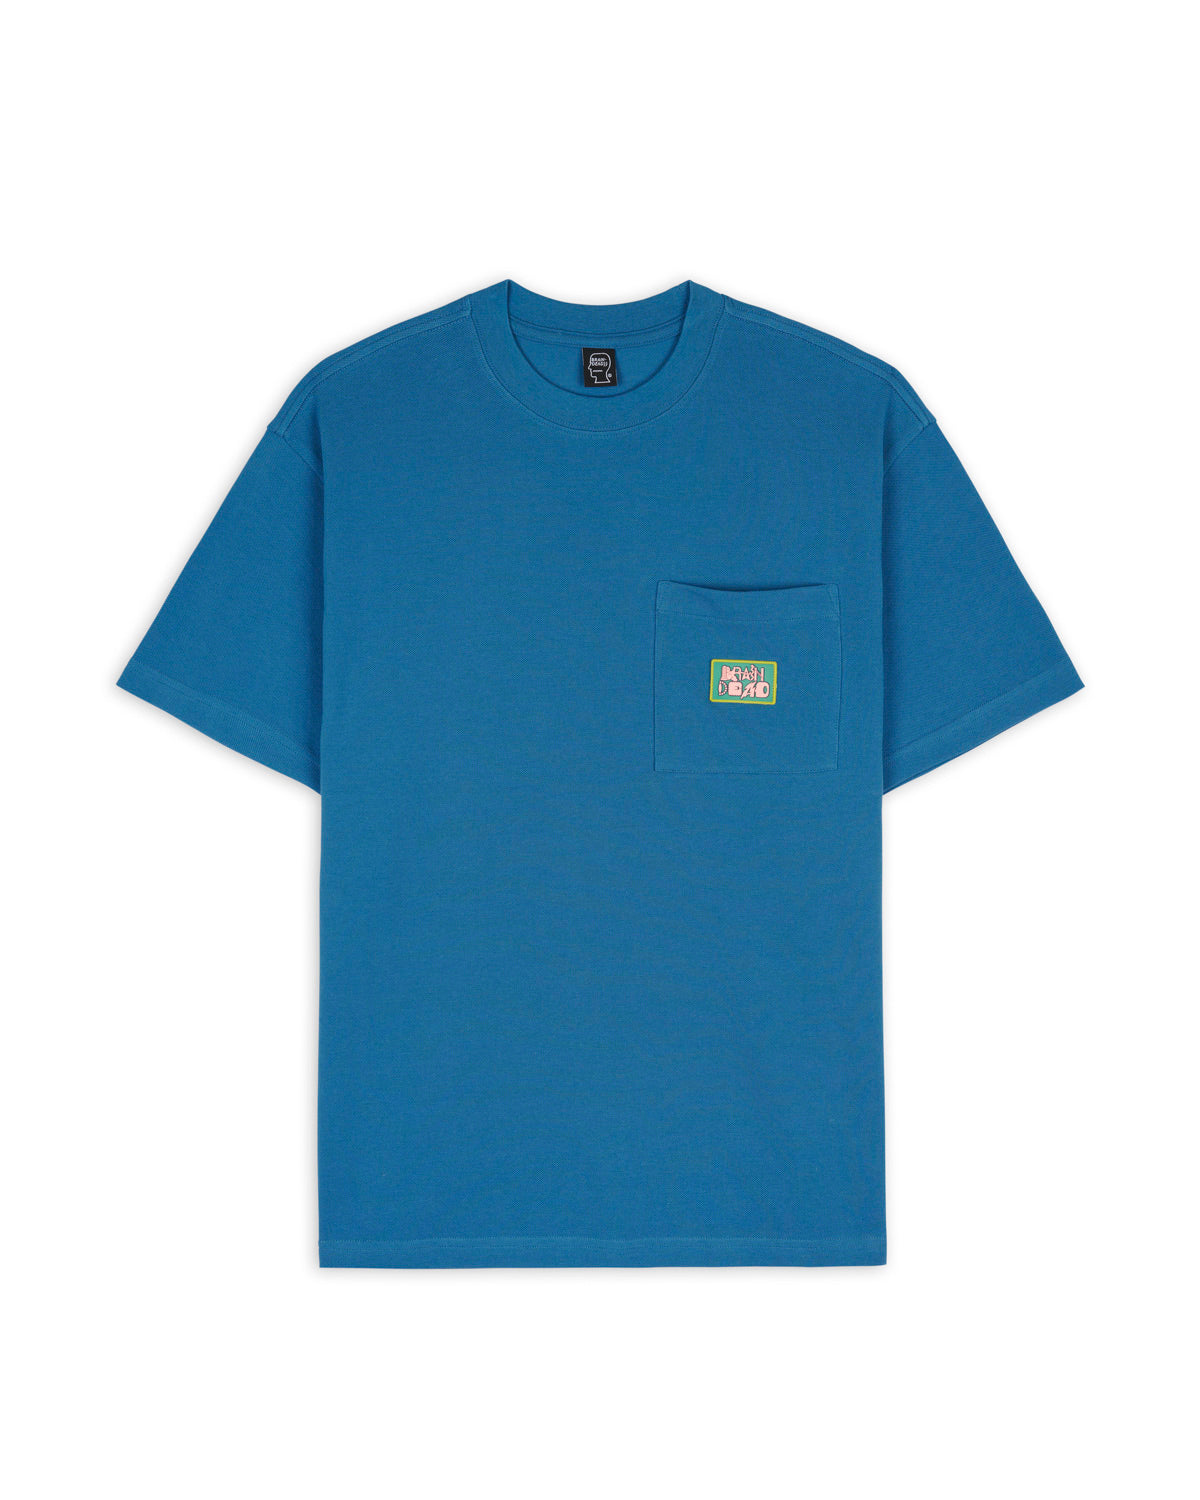 Tubes Pique T-Shirt - China Blue 1